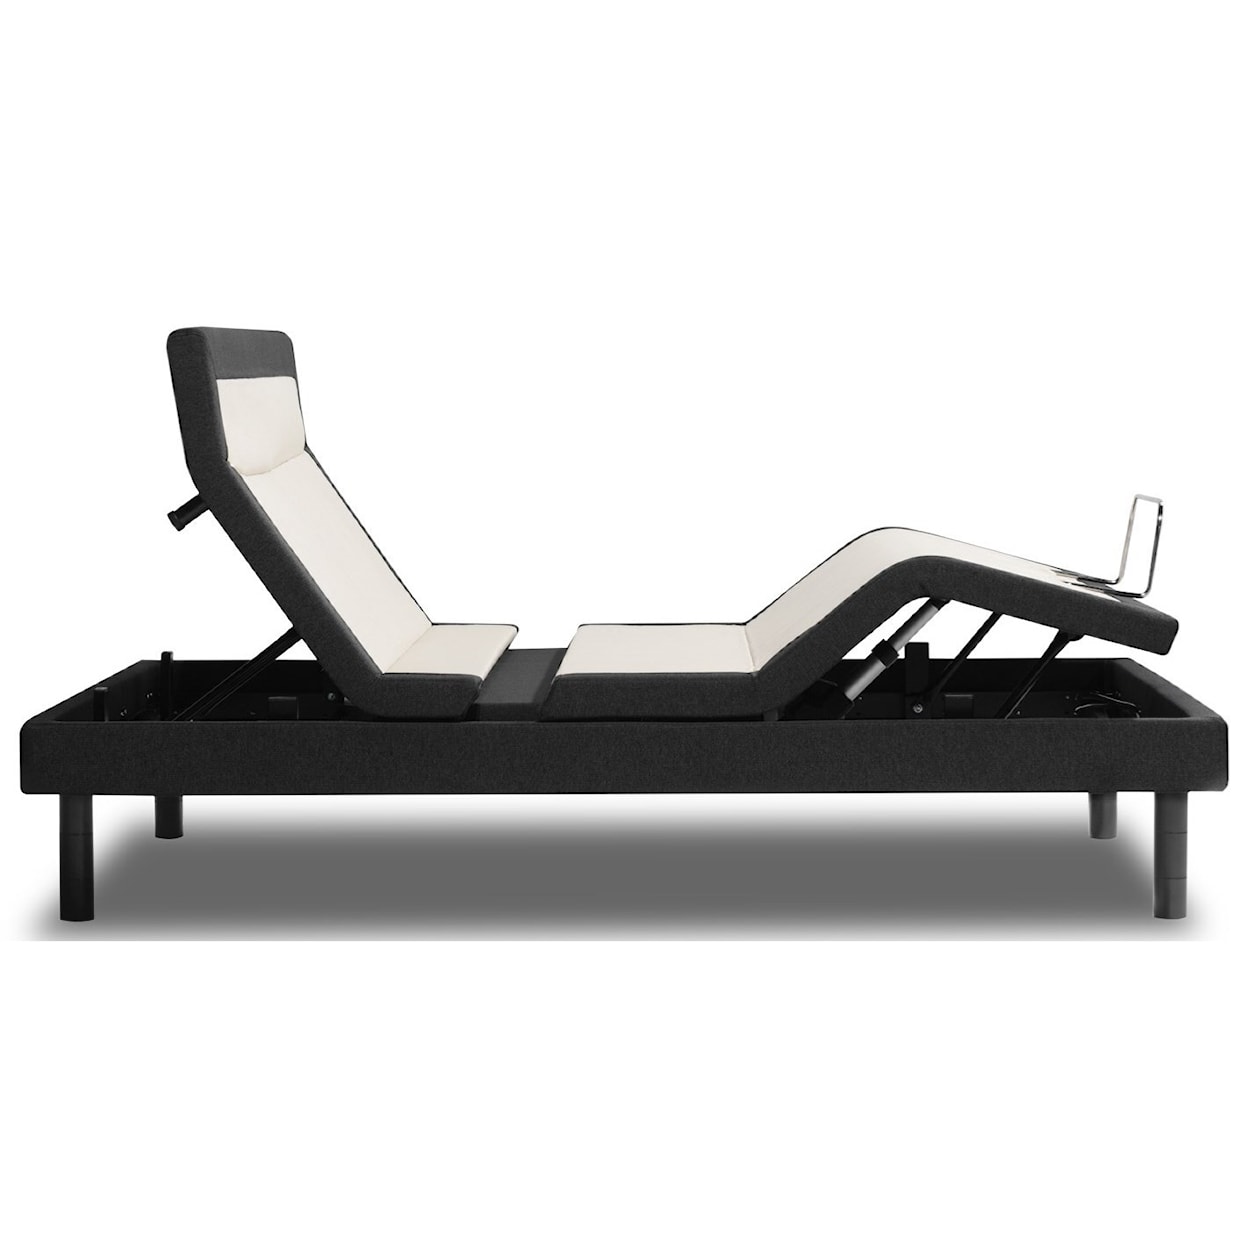 Stearns & Foster Pollock LE4 Luxury Cushion Firm King 15" Premium Hybrid Adj Set